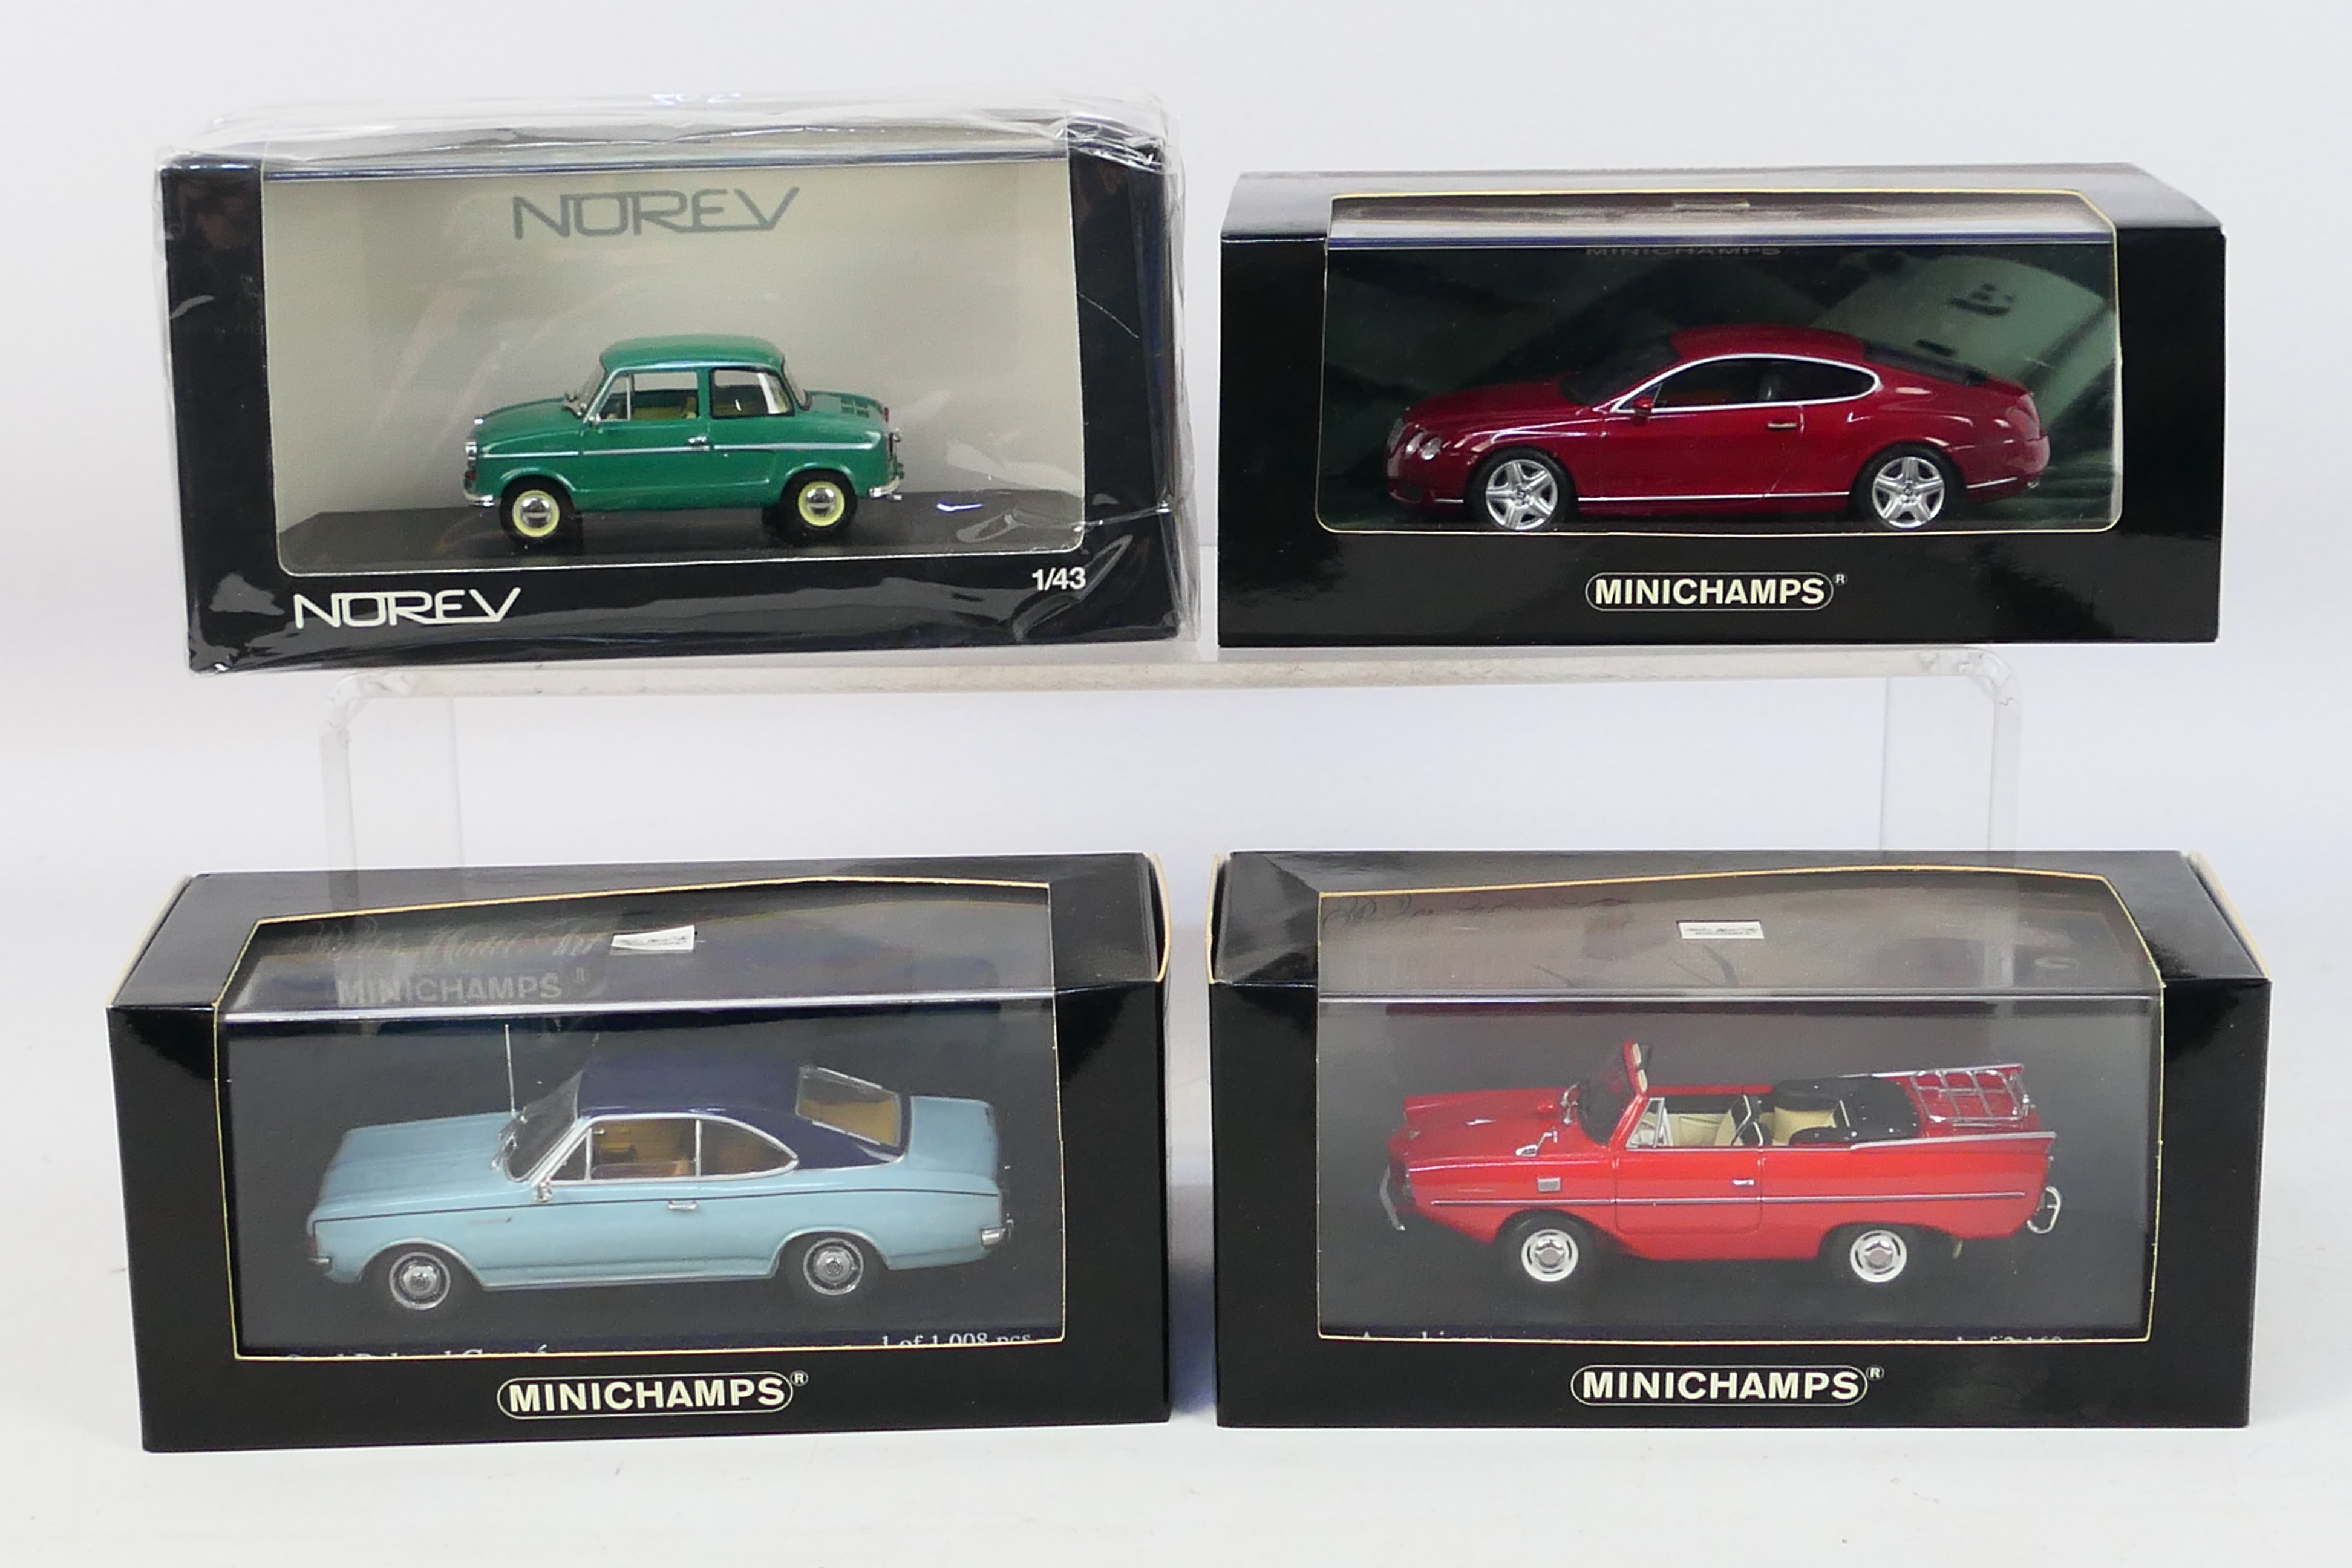 Minichamps - Norev - Four boxed 1:43 scale diecast model cars.